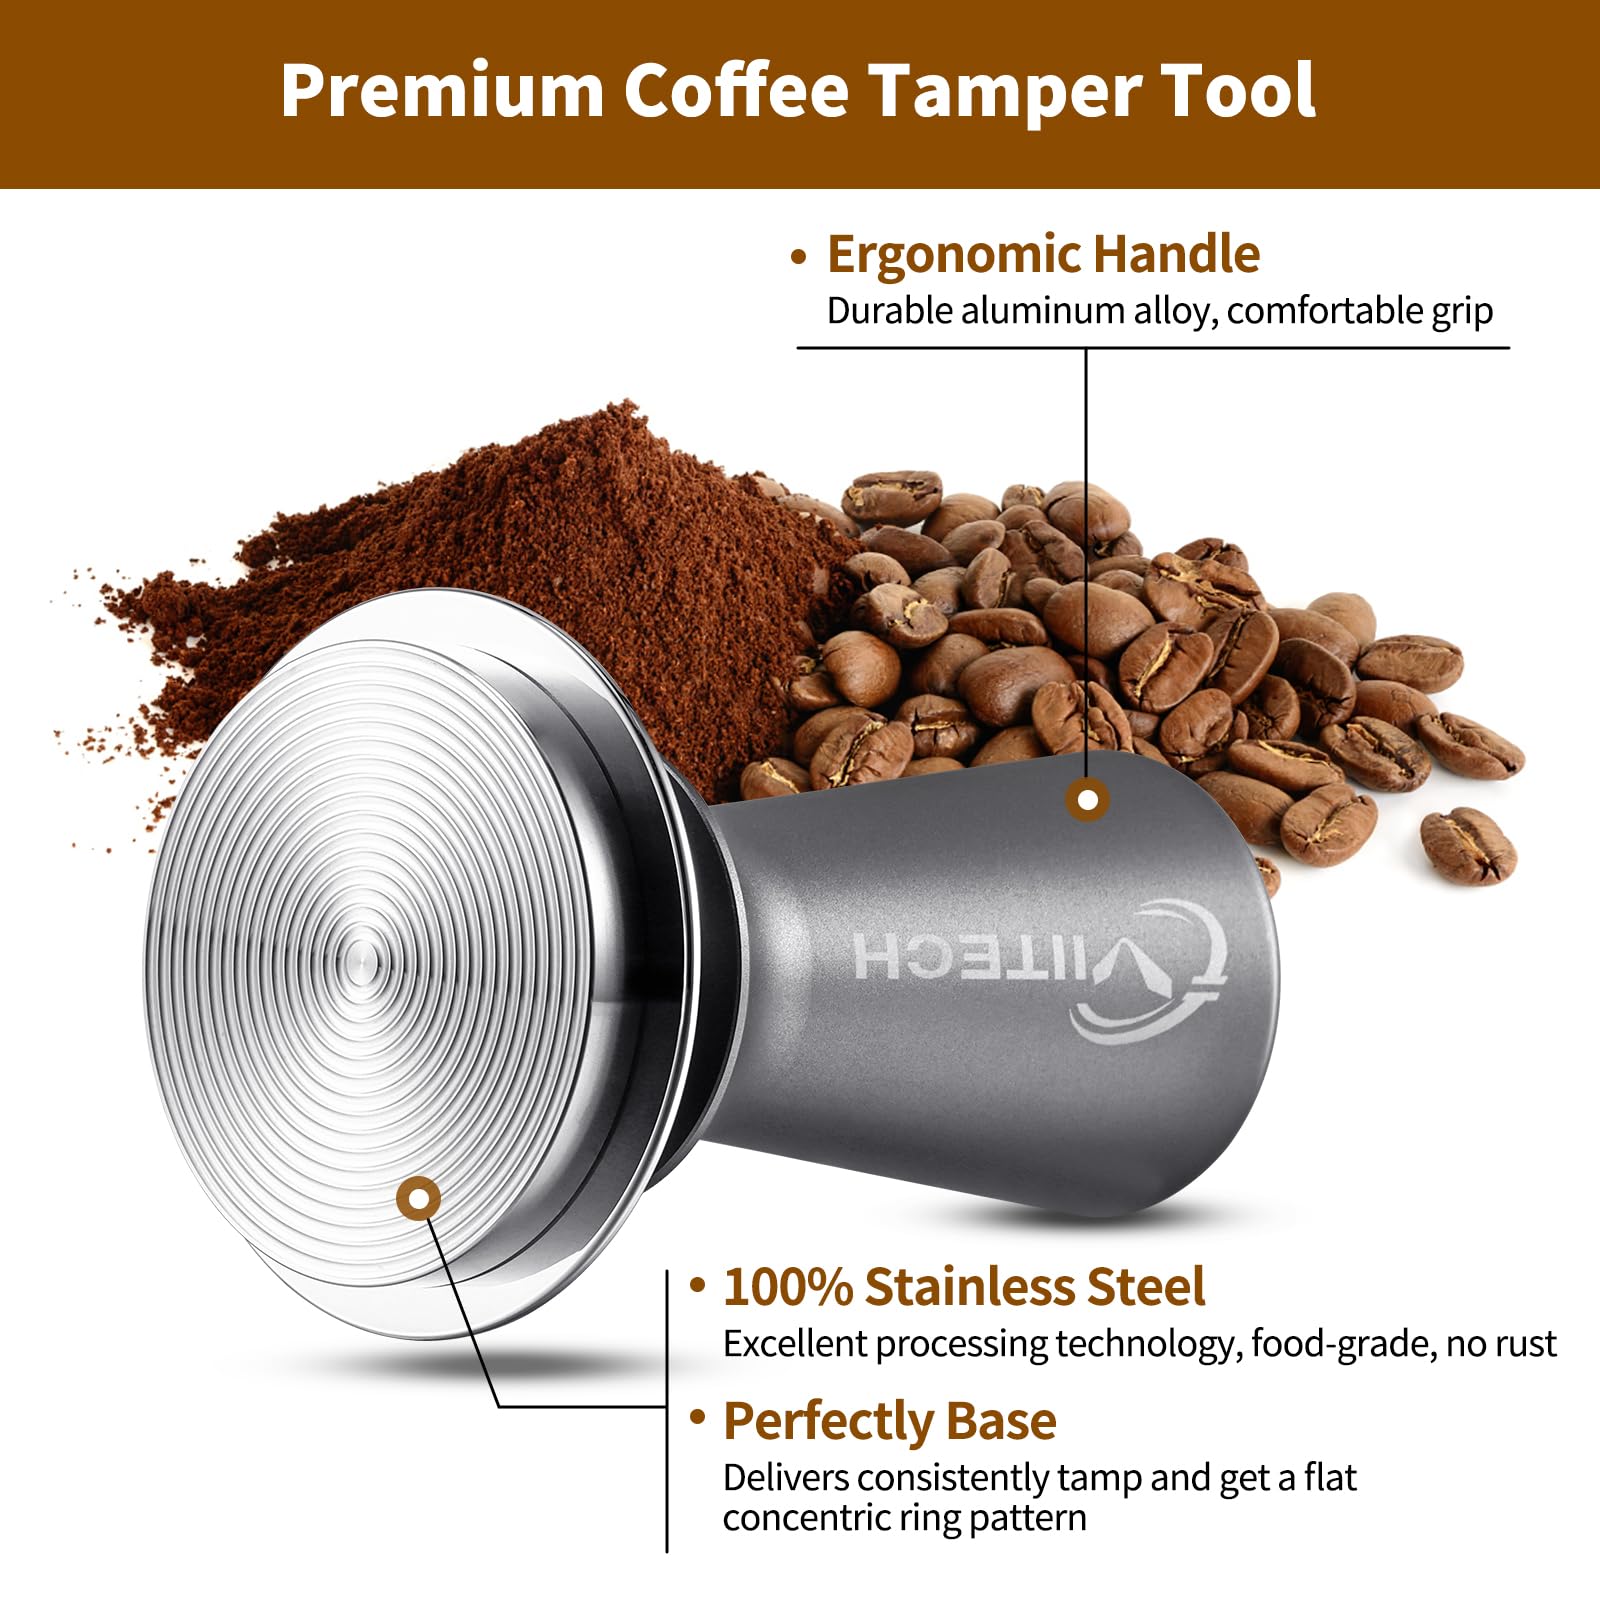 Espresso Tamper, Viitech 53mm Coffee Tamper for Espresso Machine, Premium Calibrated Tamper with Spring Loaded, Constant 30lb Barista Hand Tamper Tools for Breville Series 54mm Portafilter Basket